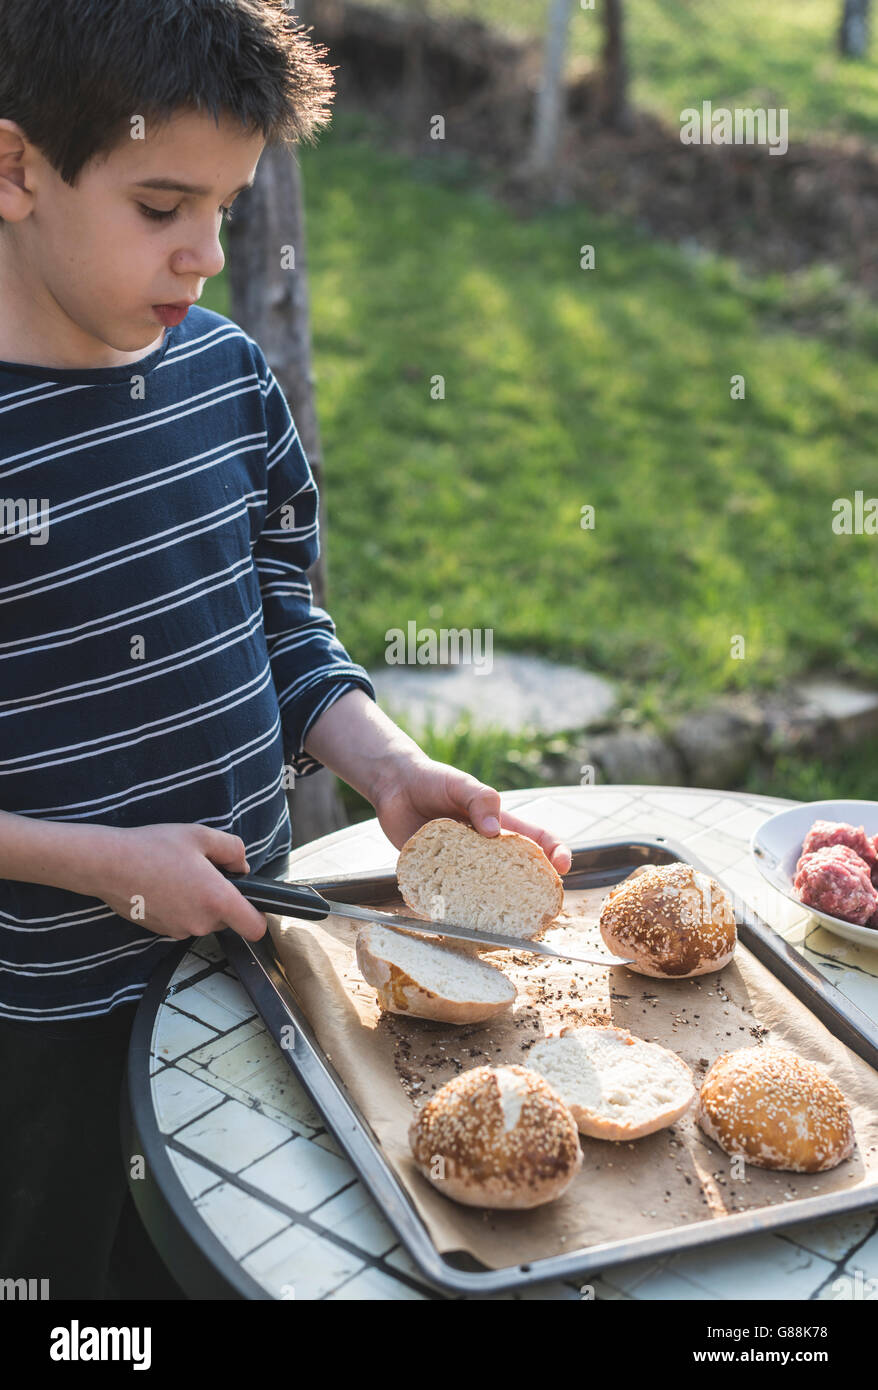 Boy cutting burger buns in the garden Stock Photo